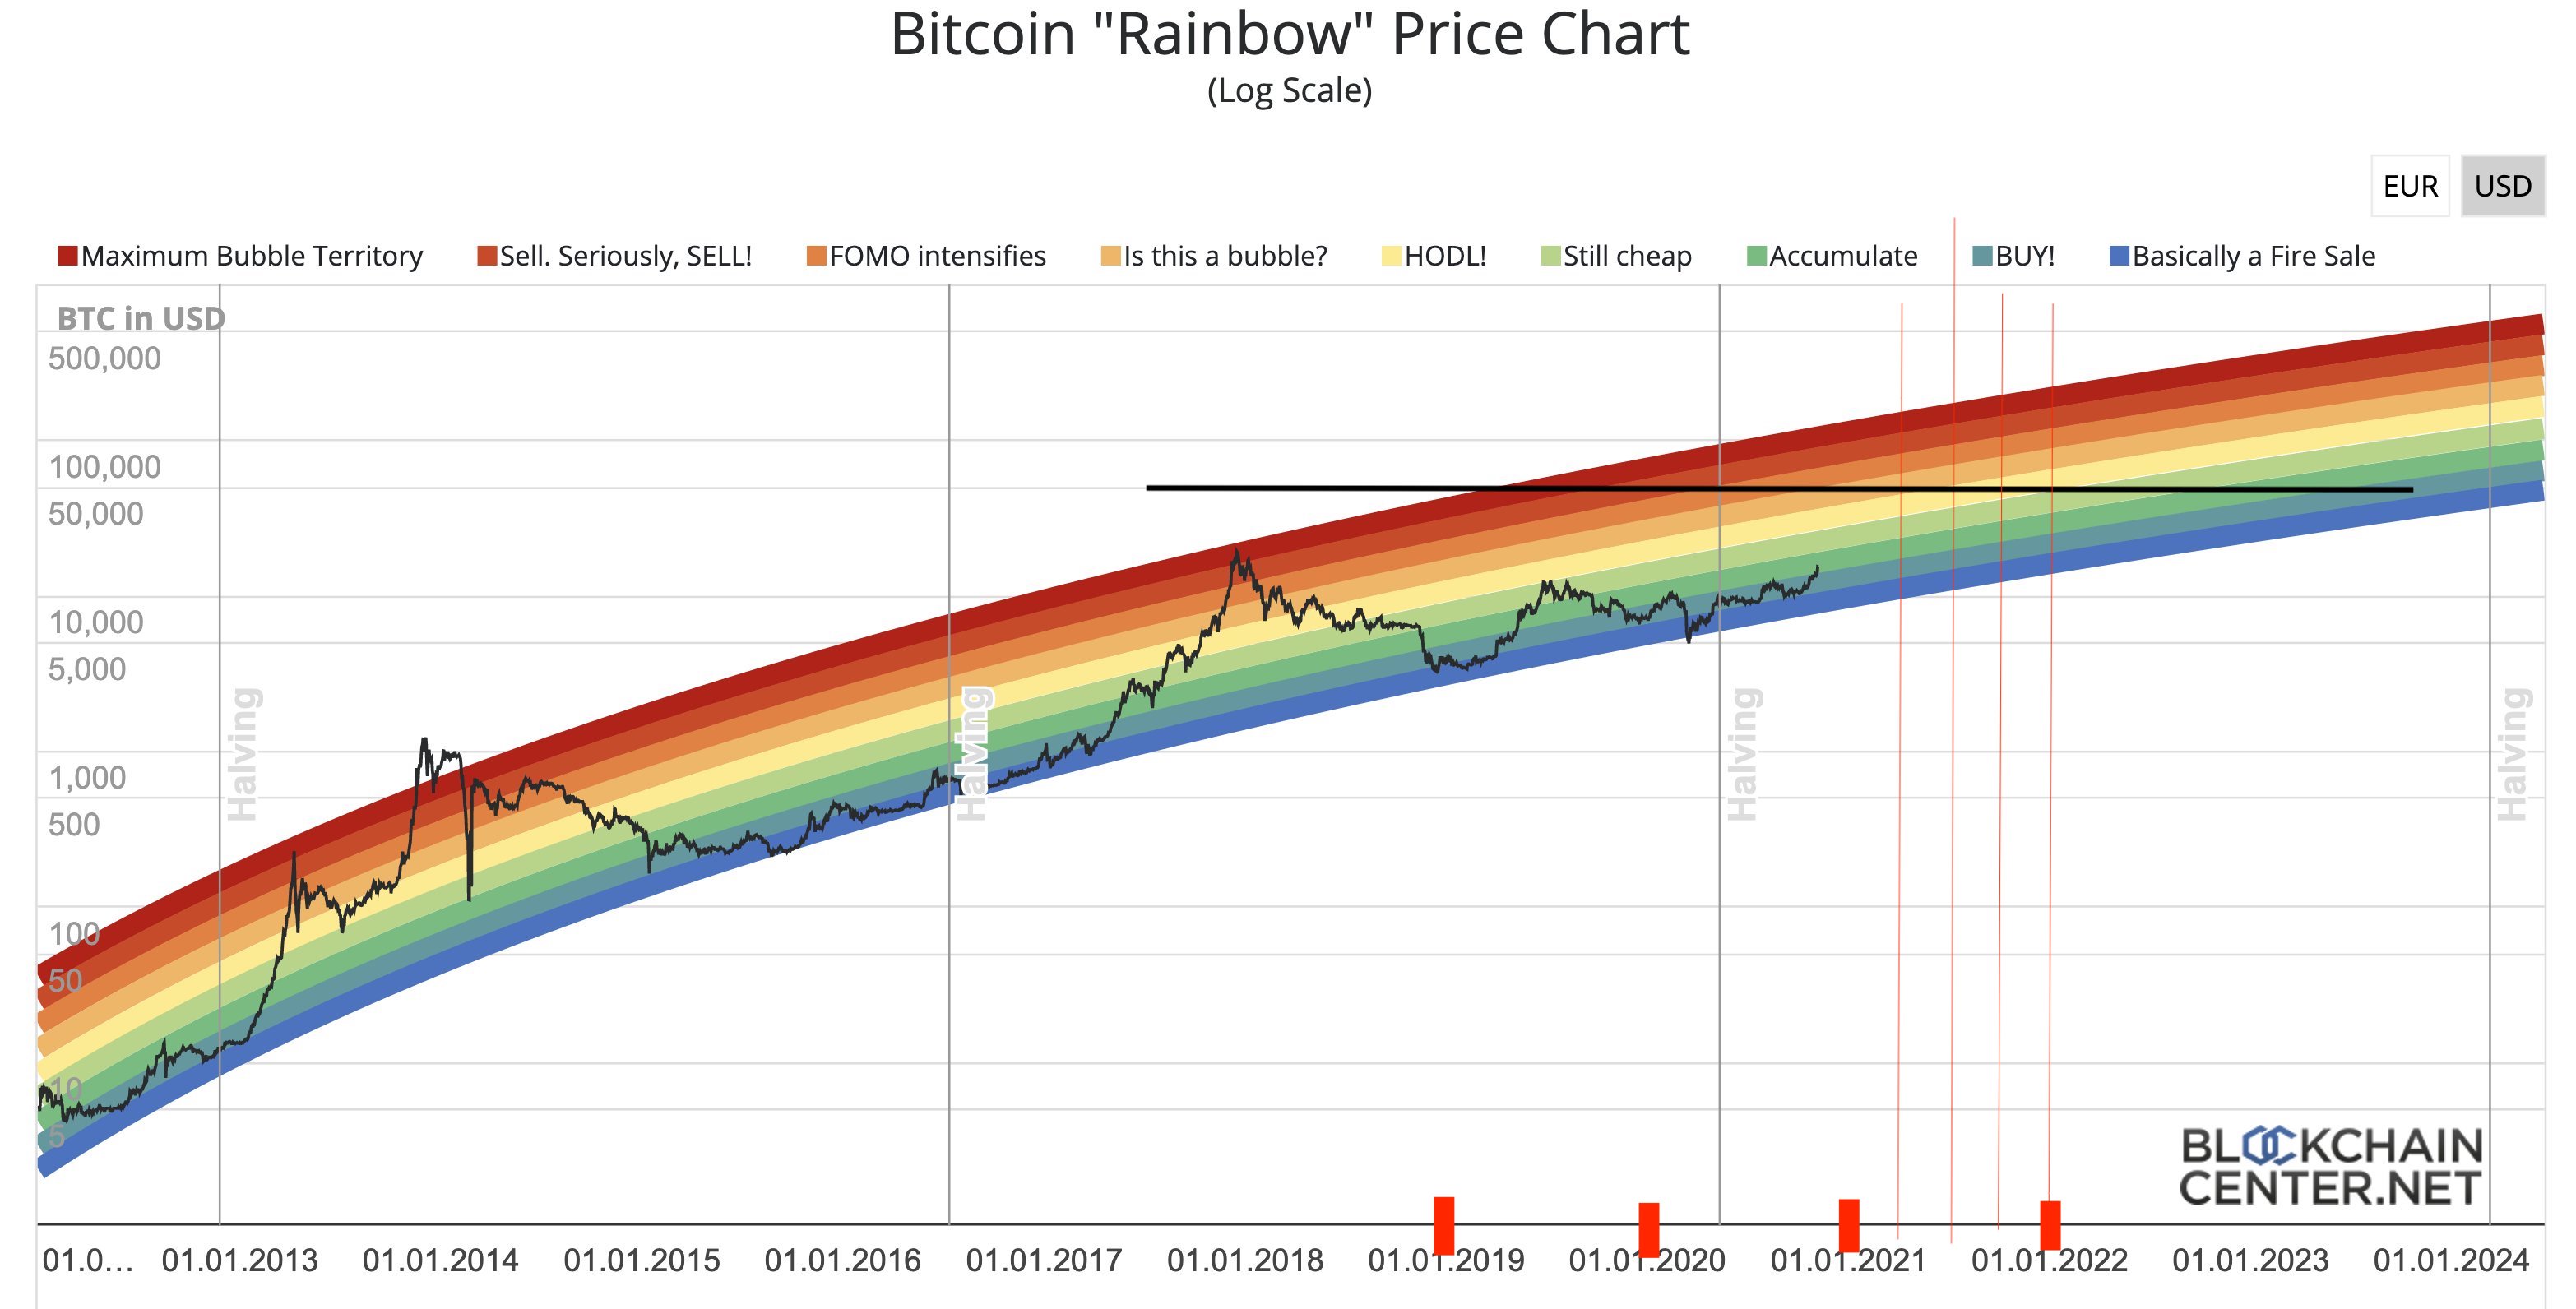 bitcoin rainbow price
bands